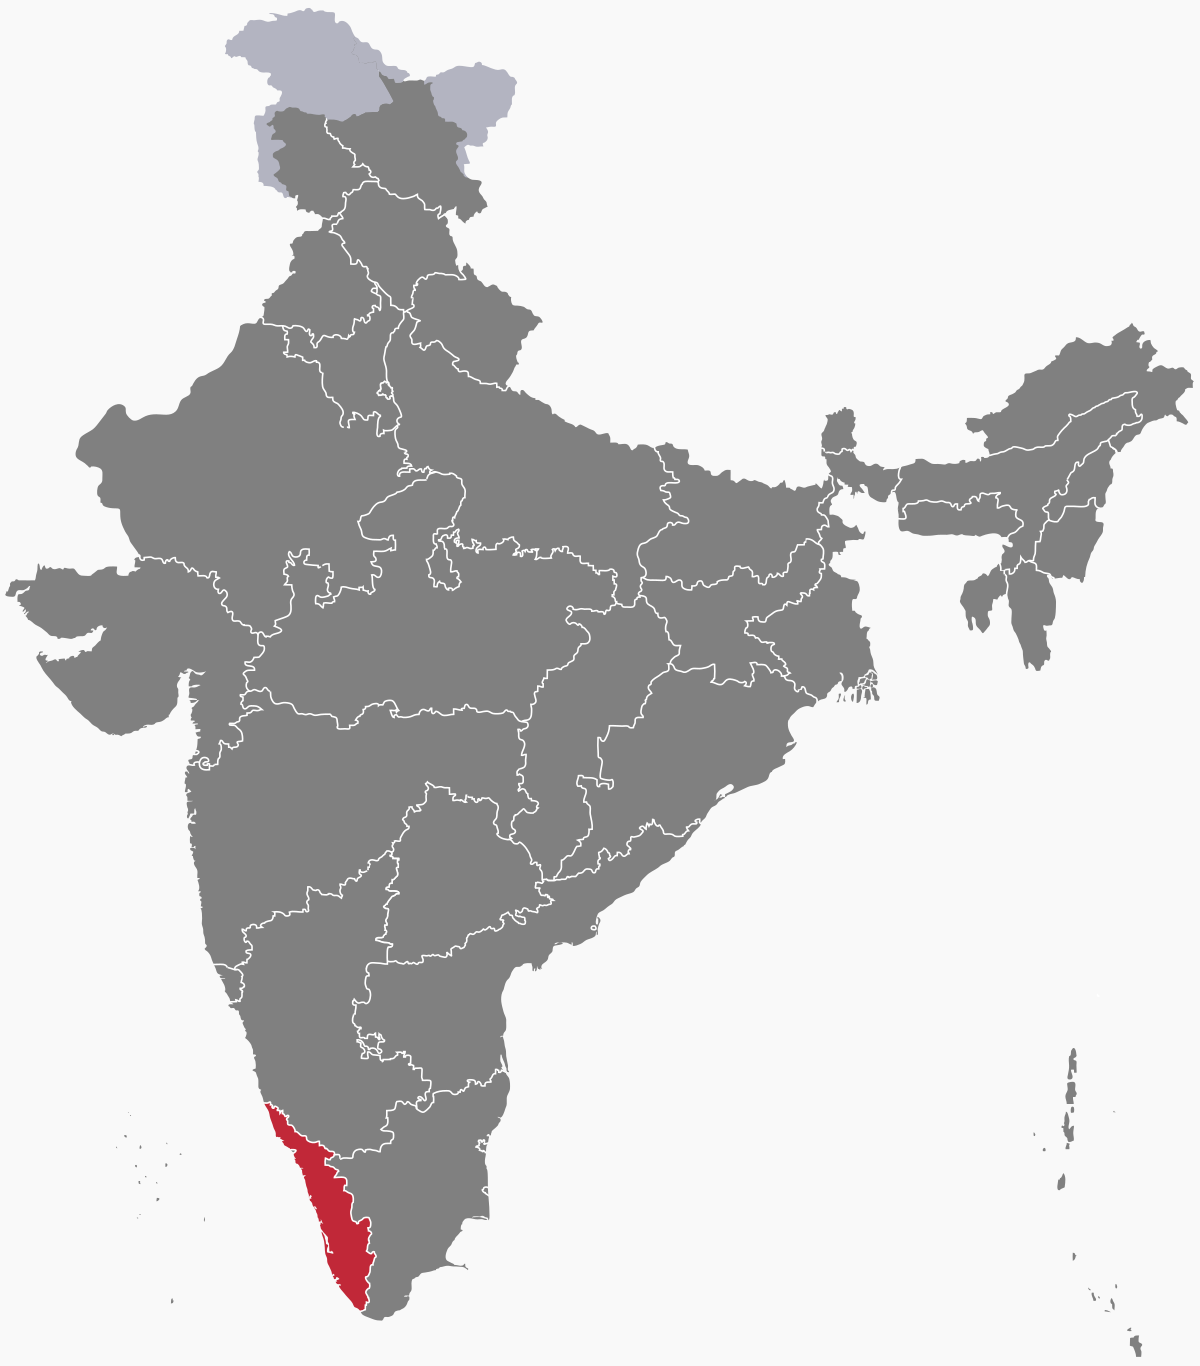 2019 Kerala floods - Wikipedia